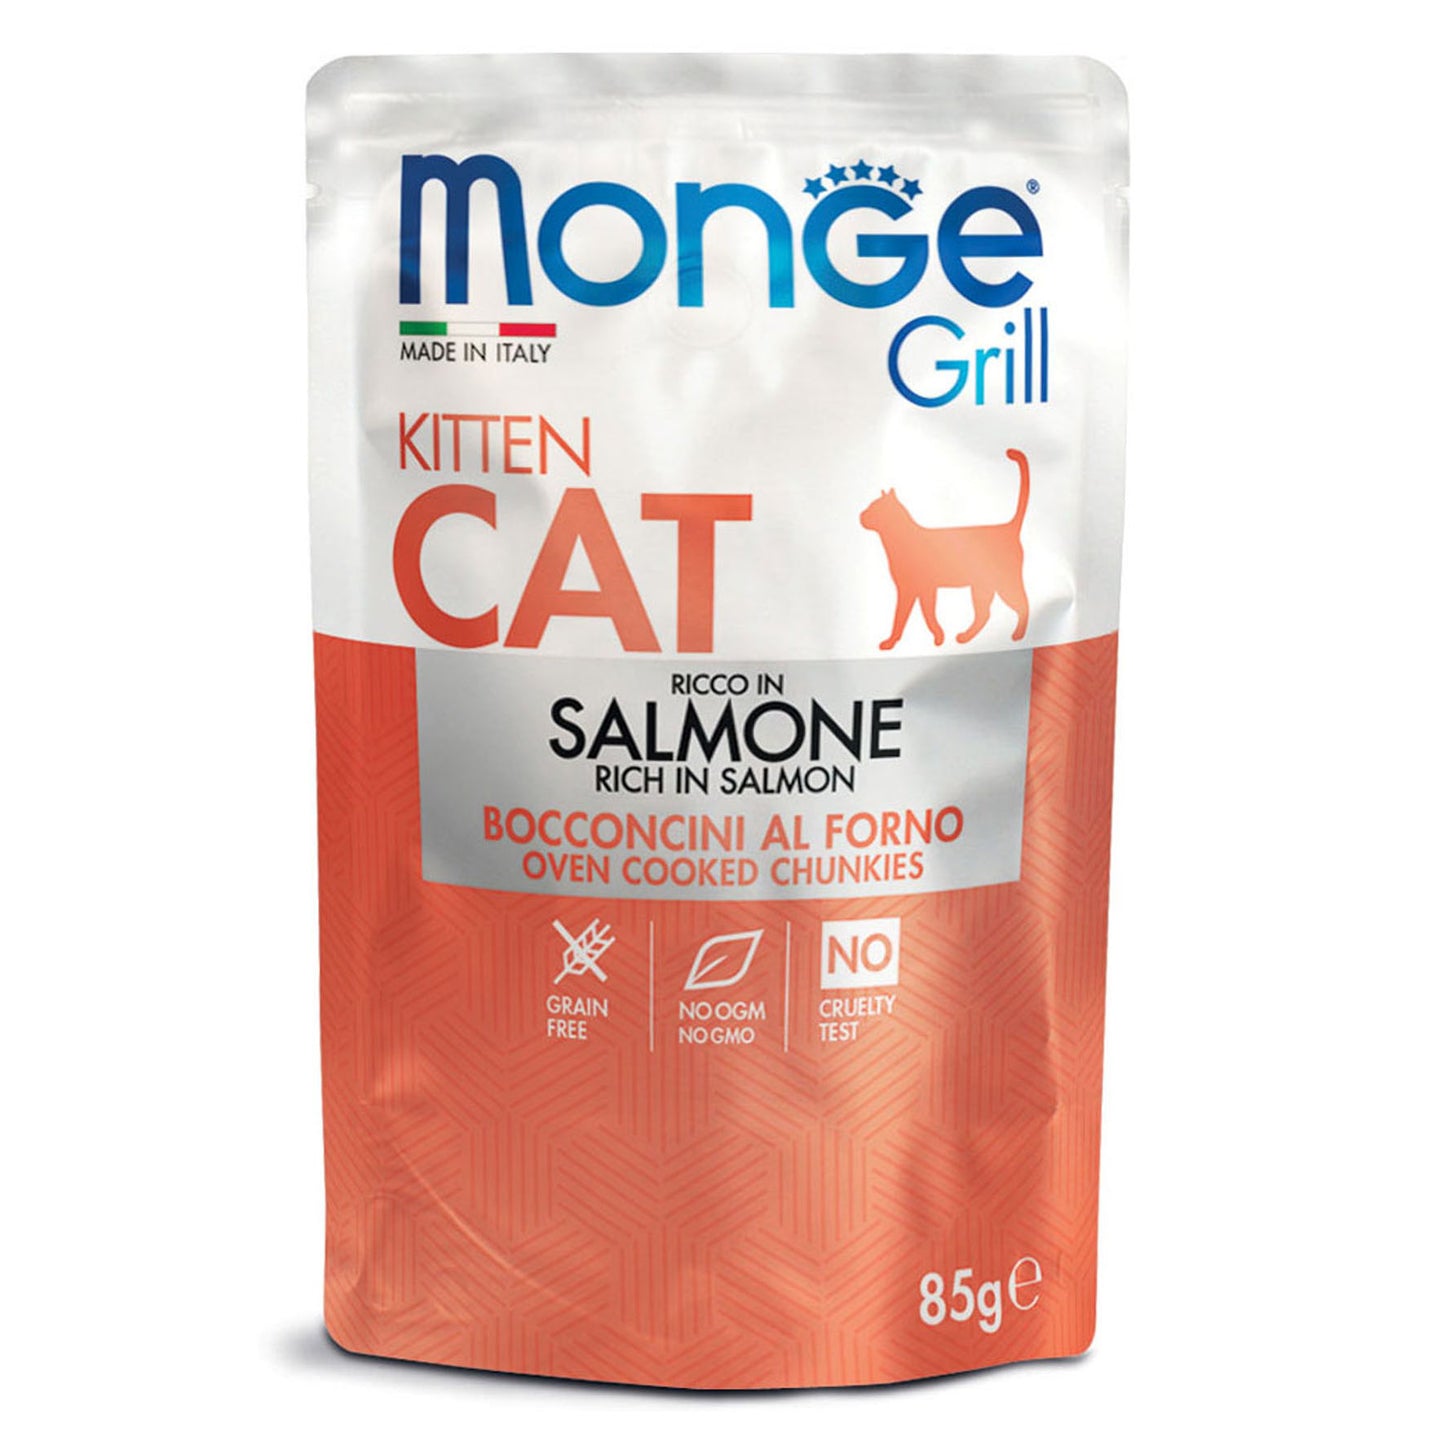 Monge Grill Cat - Kitten Salmon